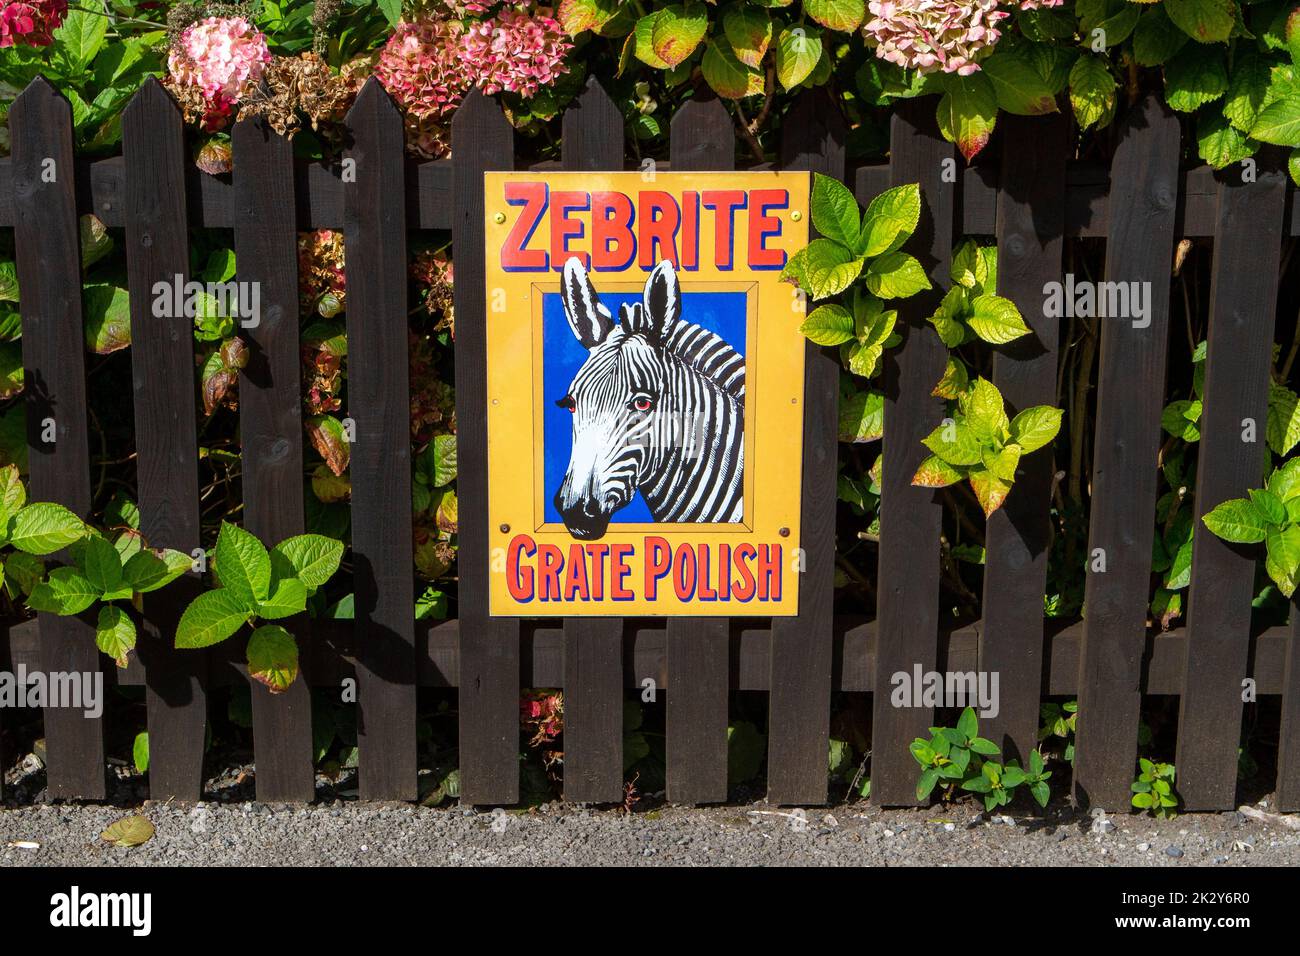 Zebrite Grate Polaco Zebra, esmalte antiguo carteles publicitarios Foto de stock